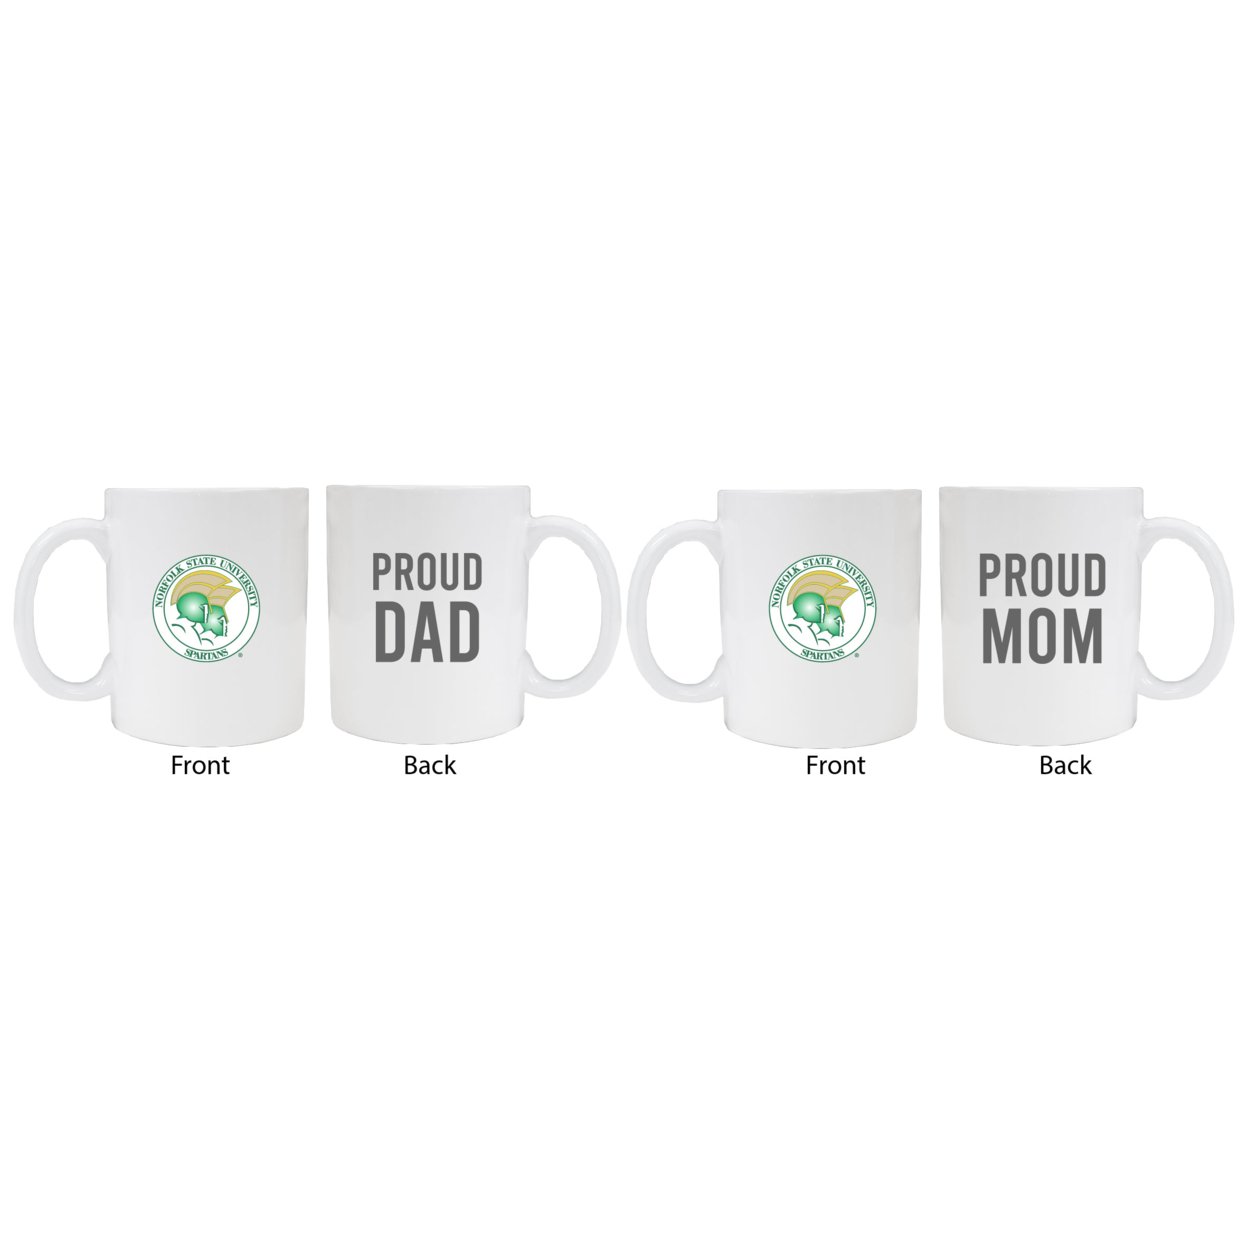 Norfolk State University Proud Mom And Dad White Ceramic Coffee Mug 2 Pack (White).